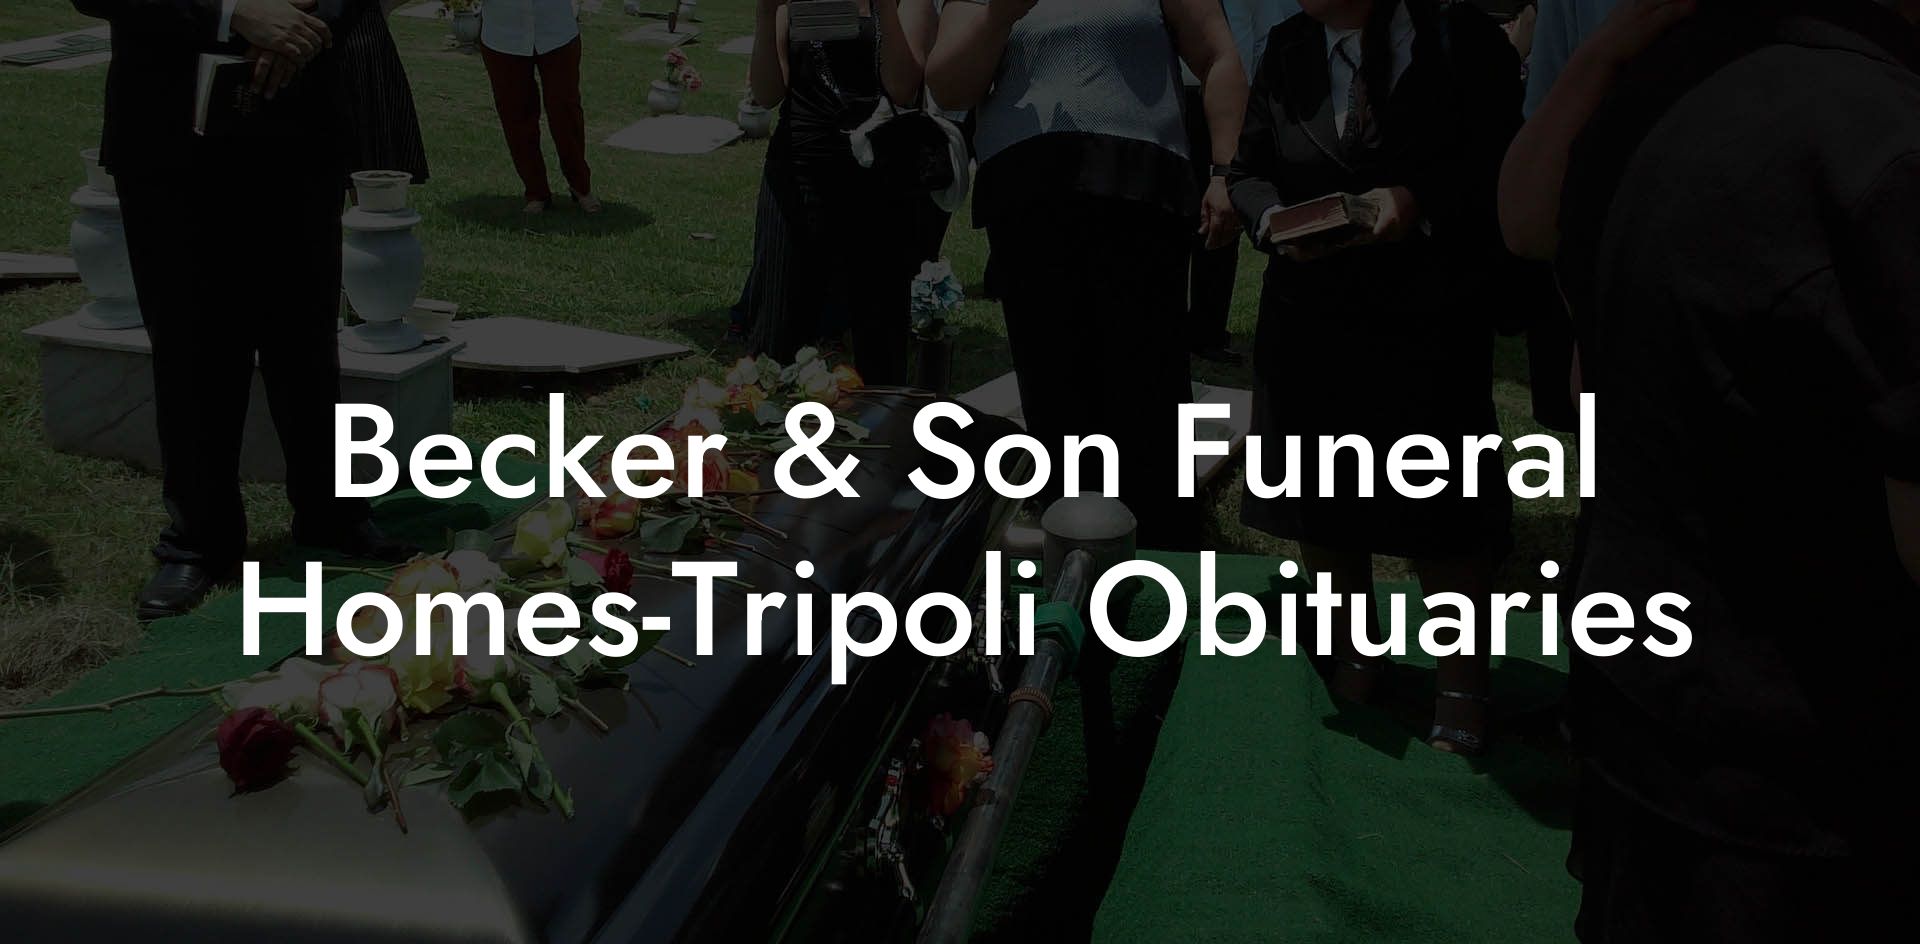 Becker & Son Funeral Homes-Tripoli Obituaries